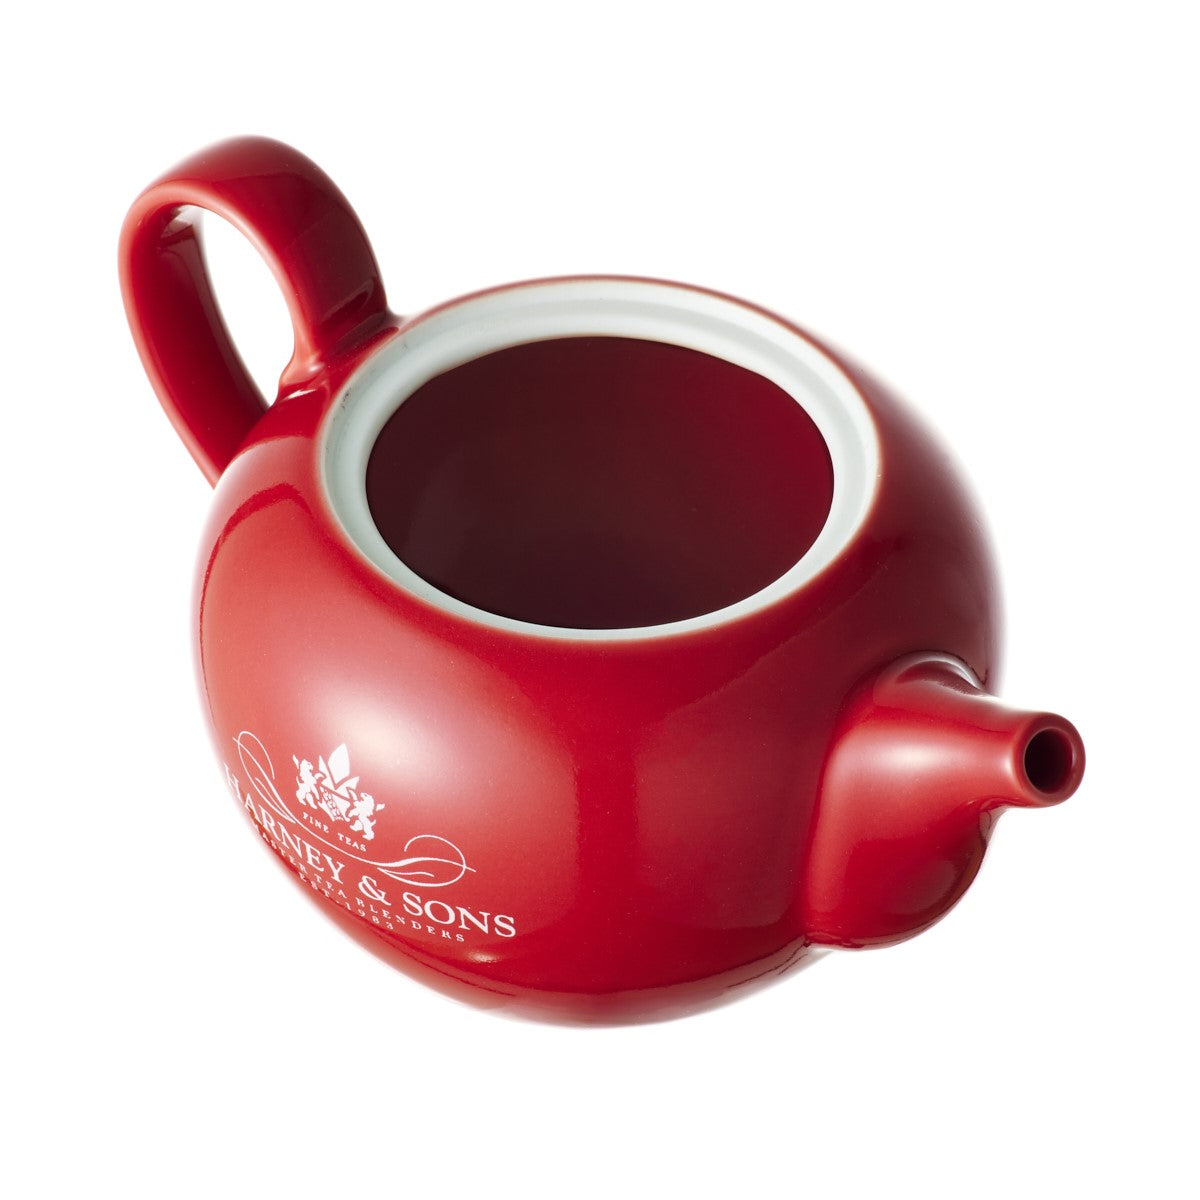 【HARNEY & SONS × ARITA PORCELAIN LAB】 Tea Pot ティーポット （Red）